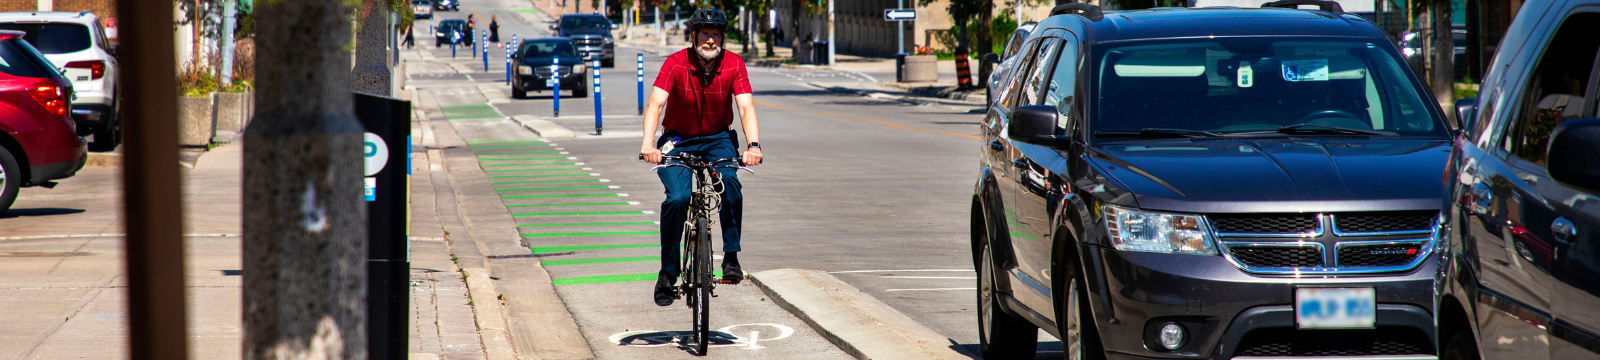 Cyclist on a downtown Oshawa street